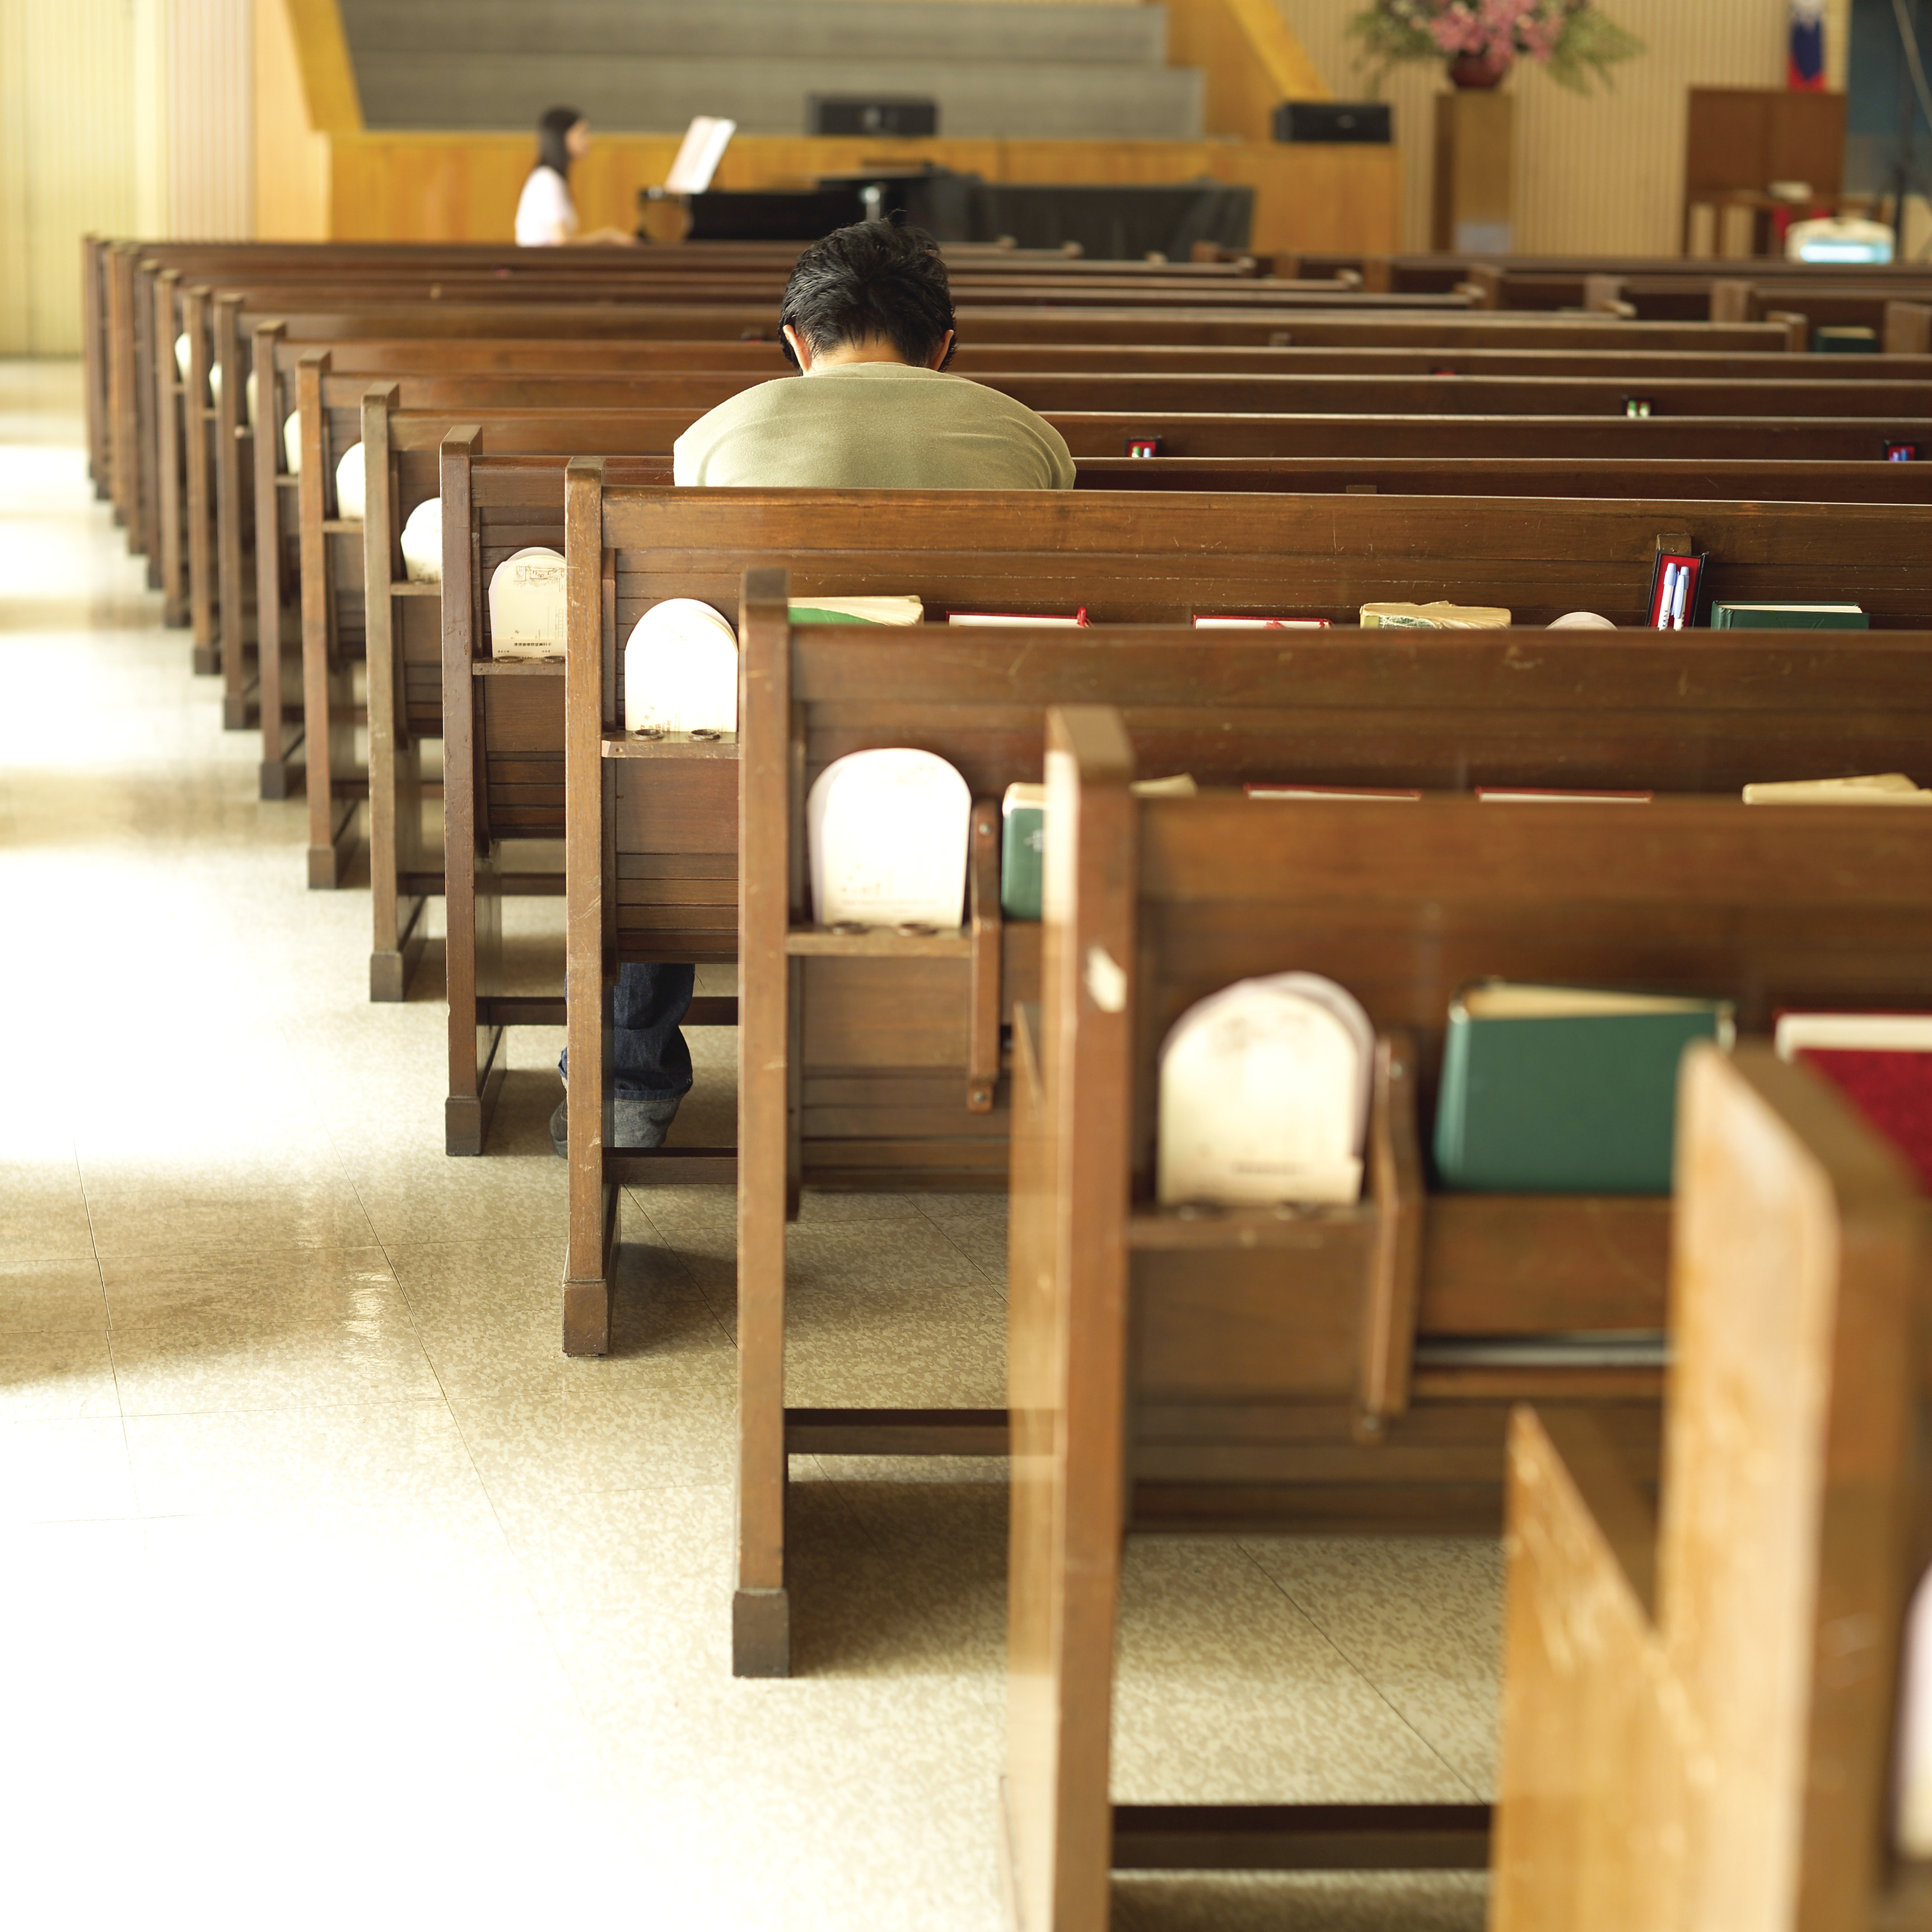 A man prays in an empty church.